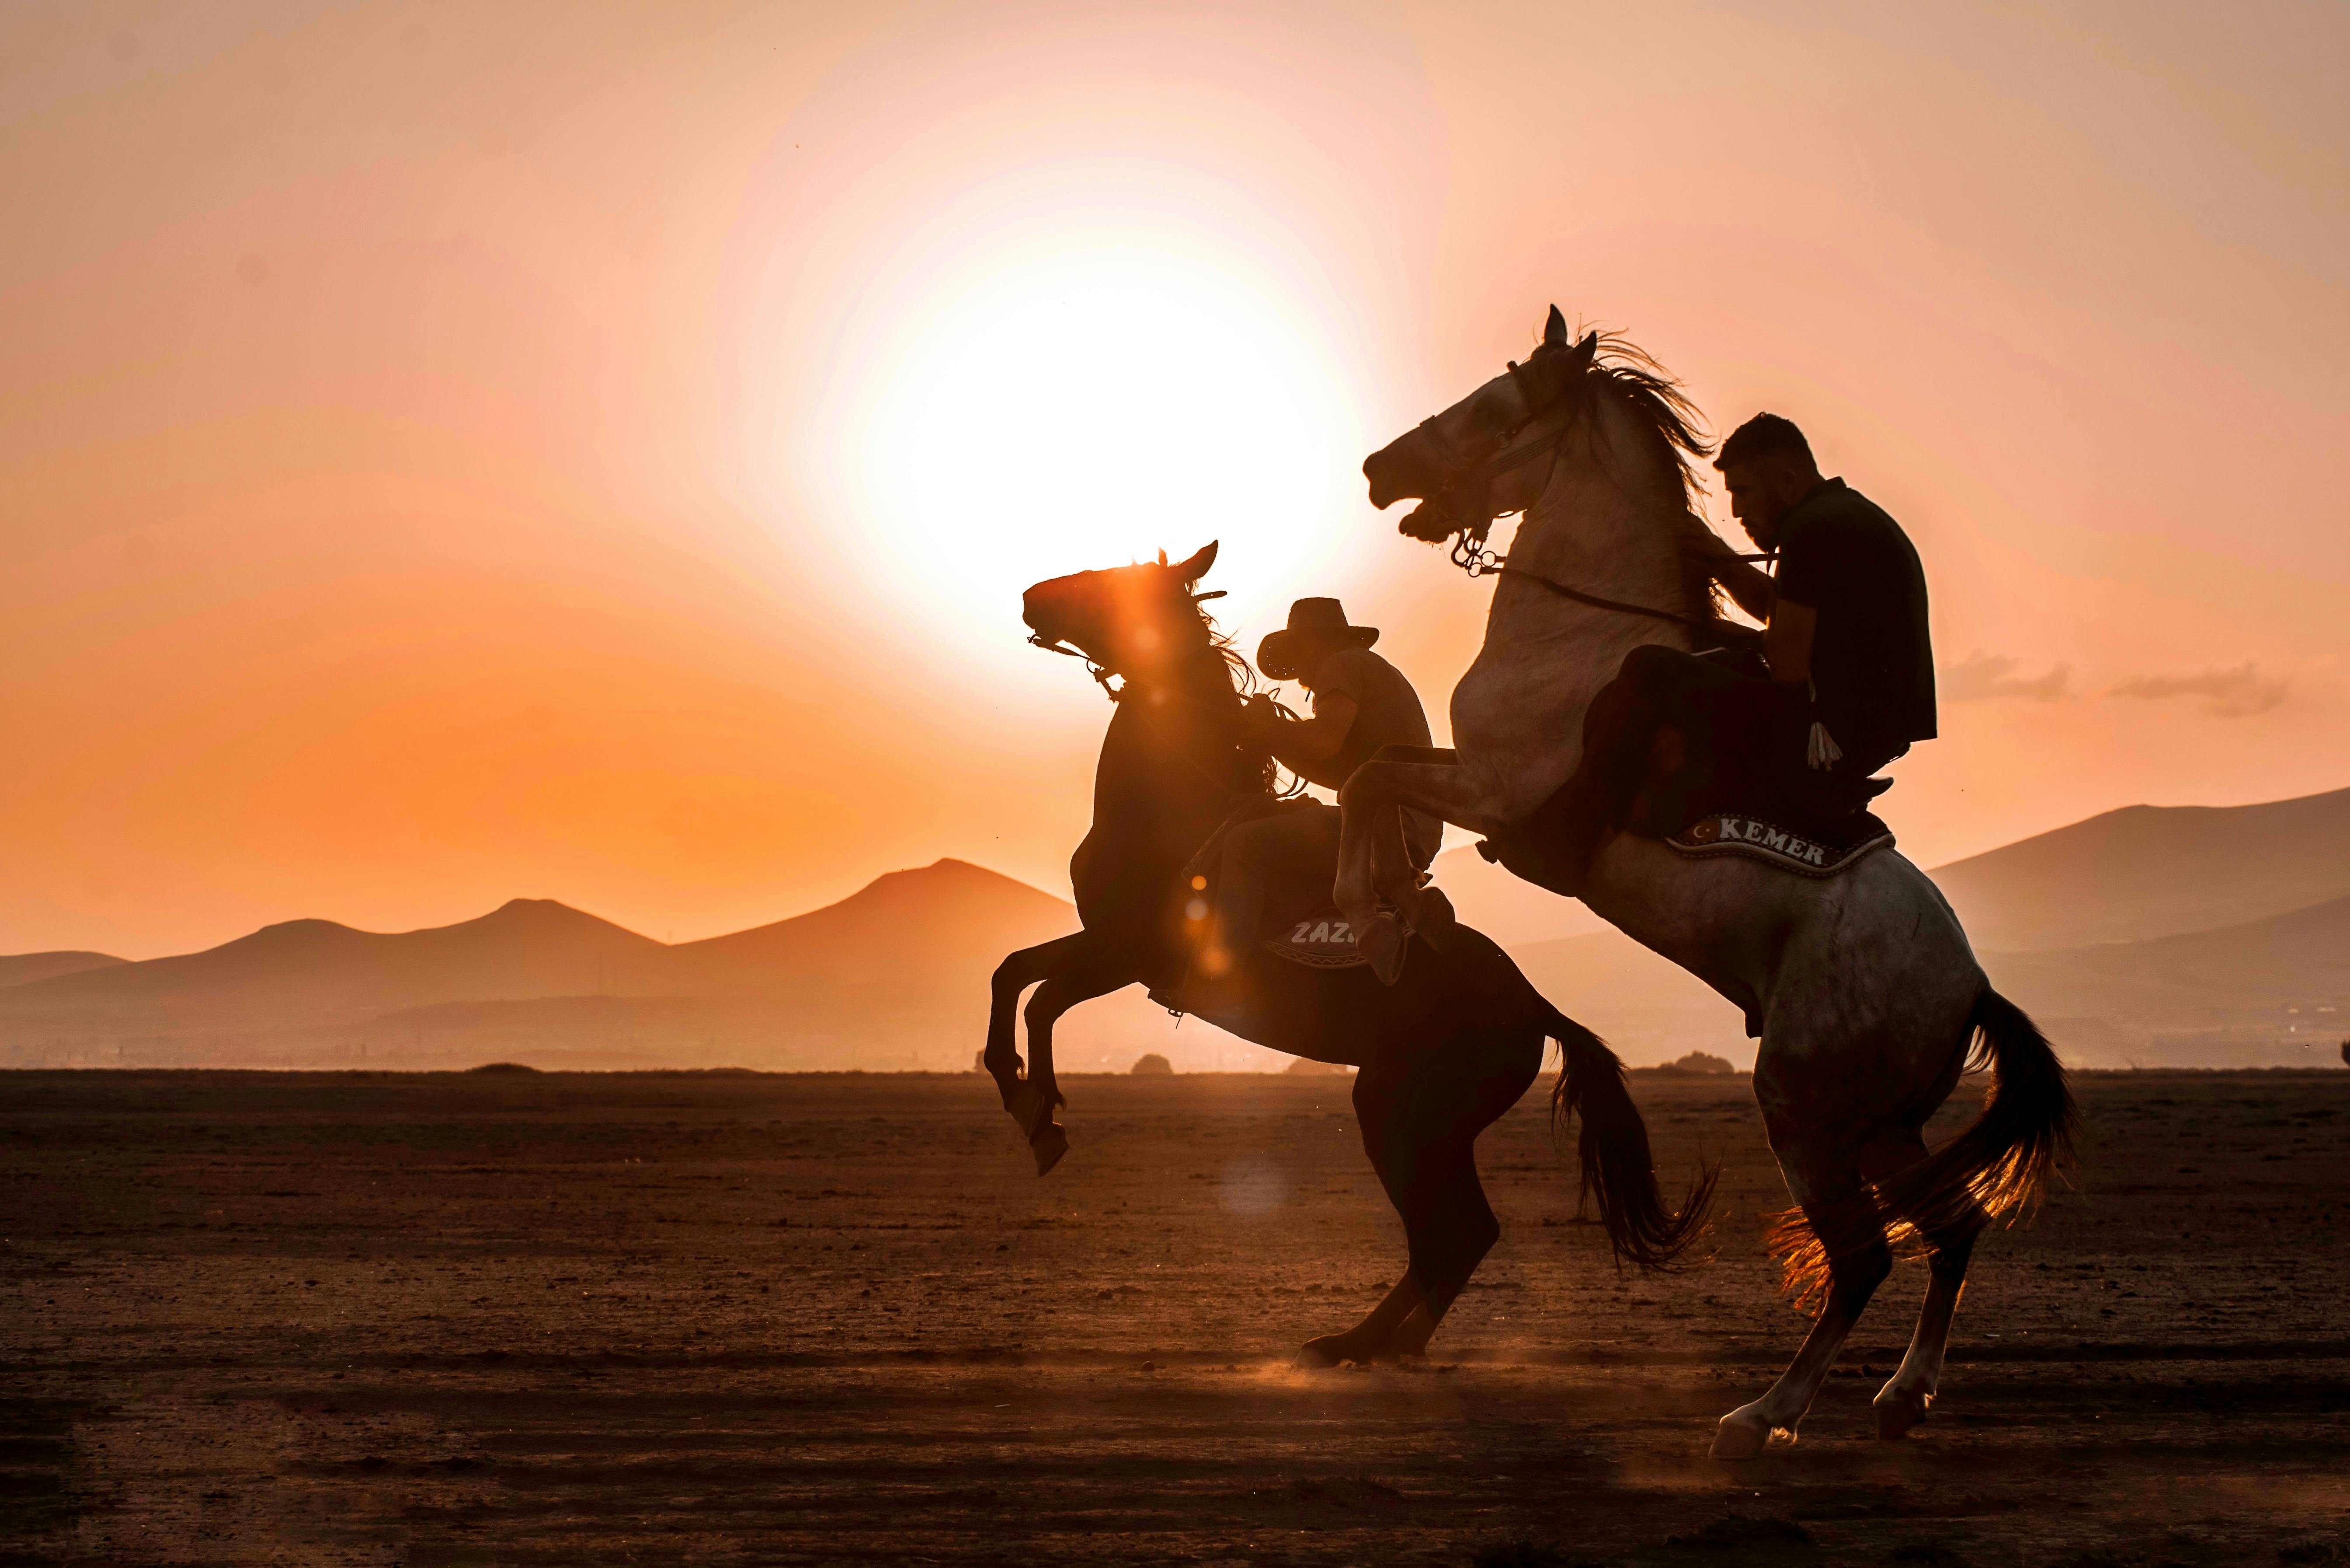 Foto de stock gratuita sobre animales, caballos, ciclistas, fondo de  pantalla, gente, llanura, luz del sol, montando a caballo, paisaje,  siluetas, sol